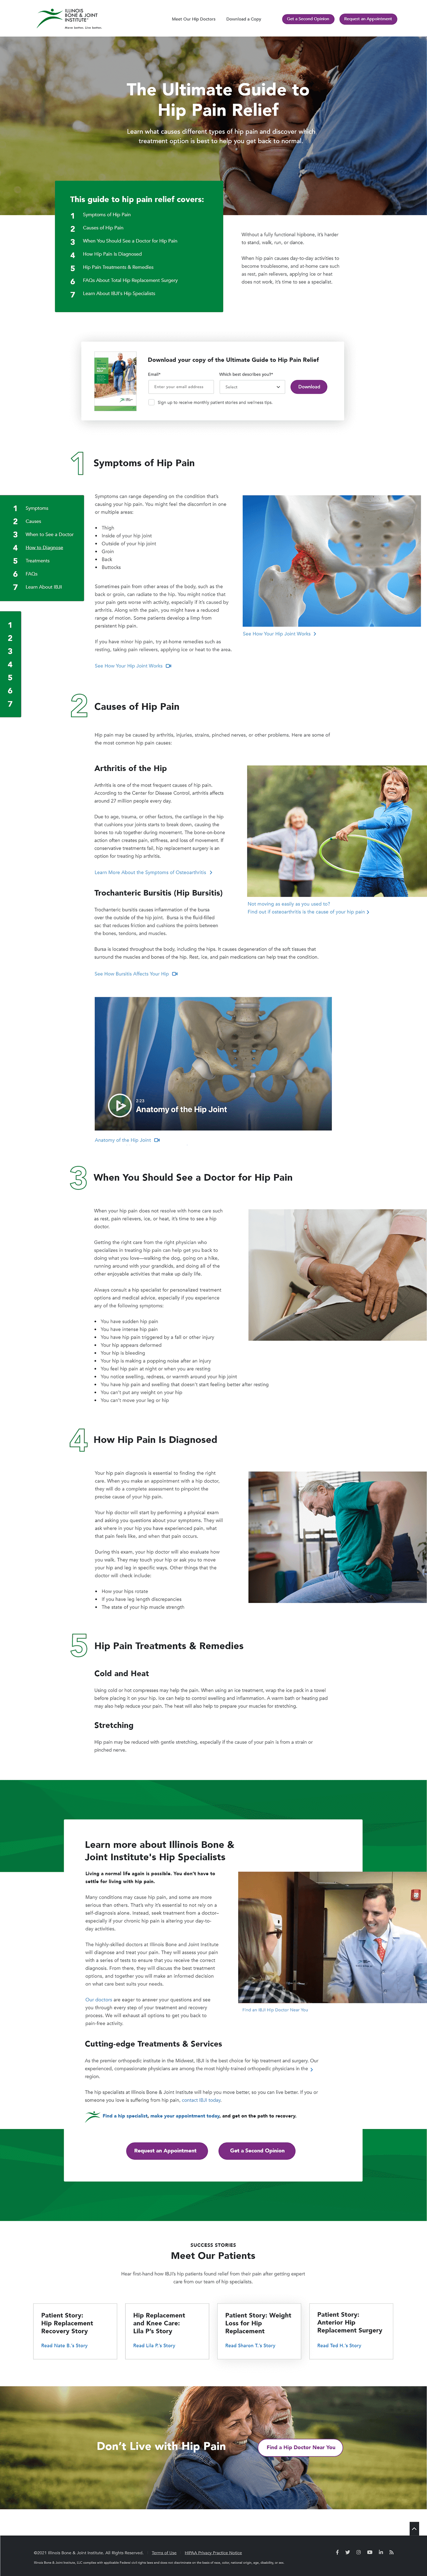 Hip pain campaign pillar page